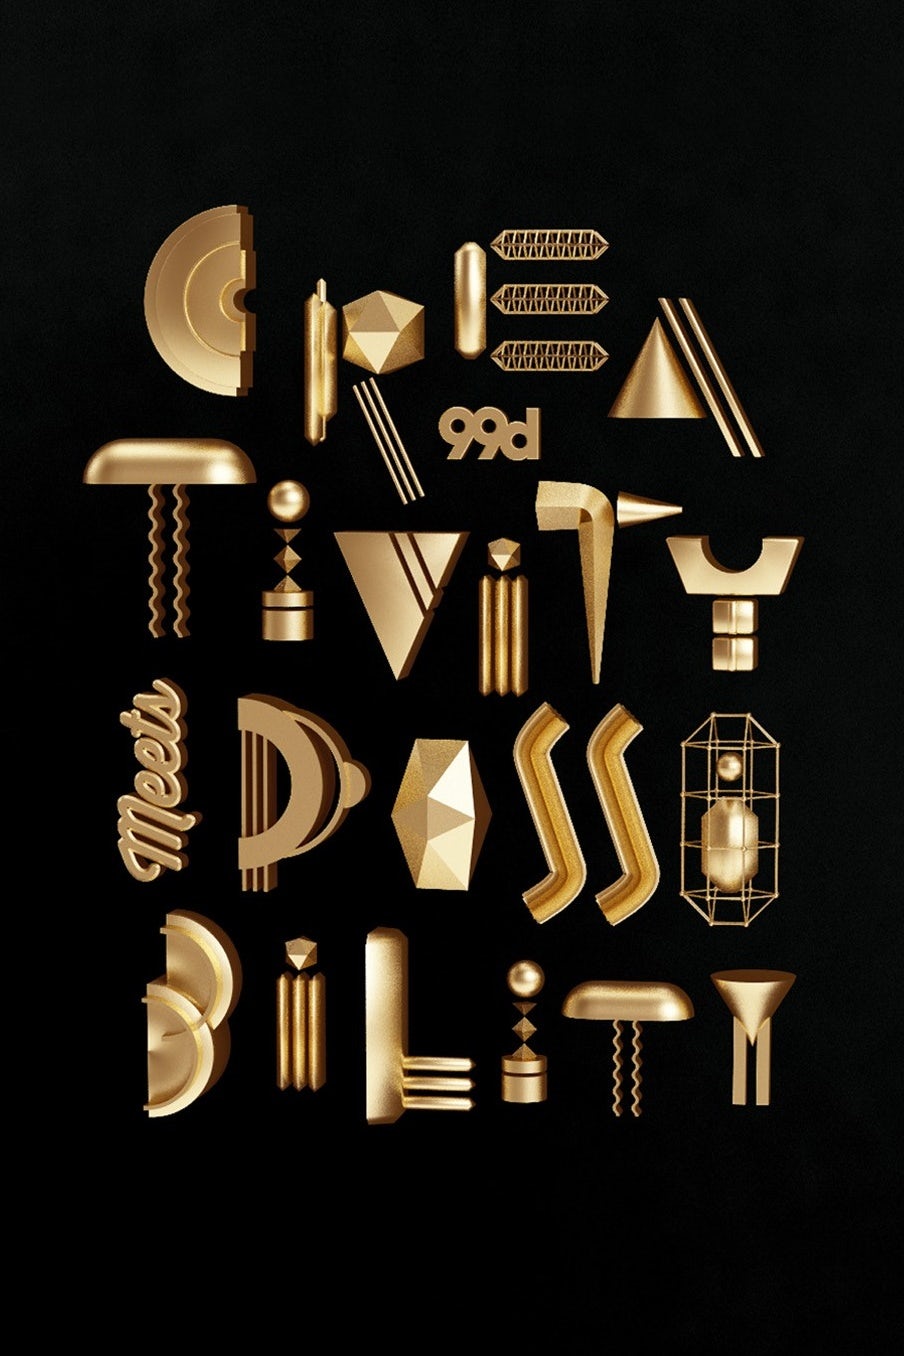 A creative and fun metallic poster